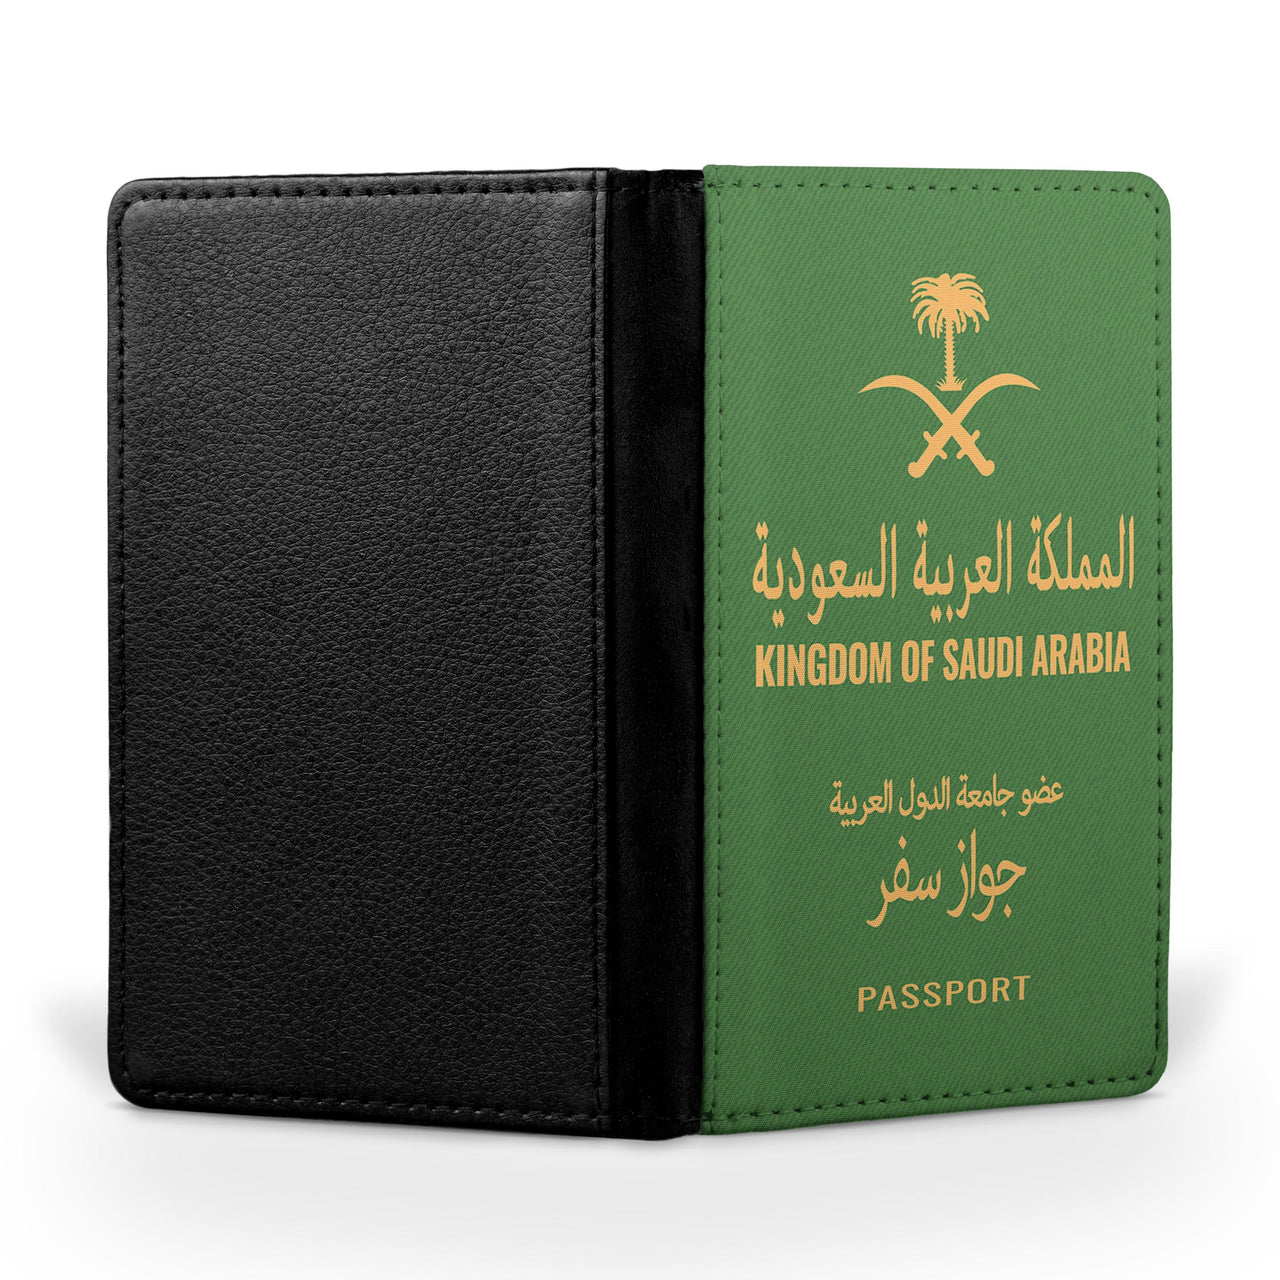 Kingdom of Saudi Arabia Passport Designed Passport & Travel Cases